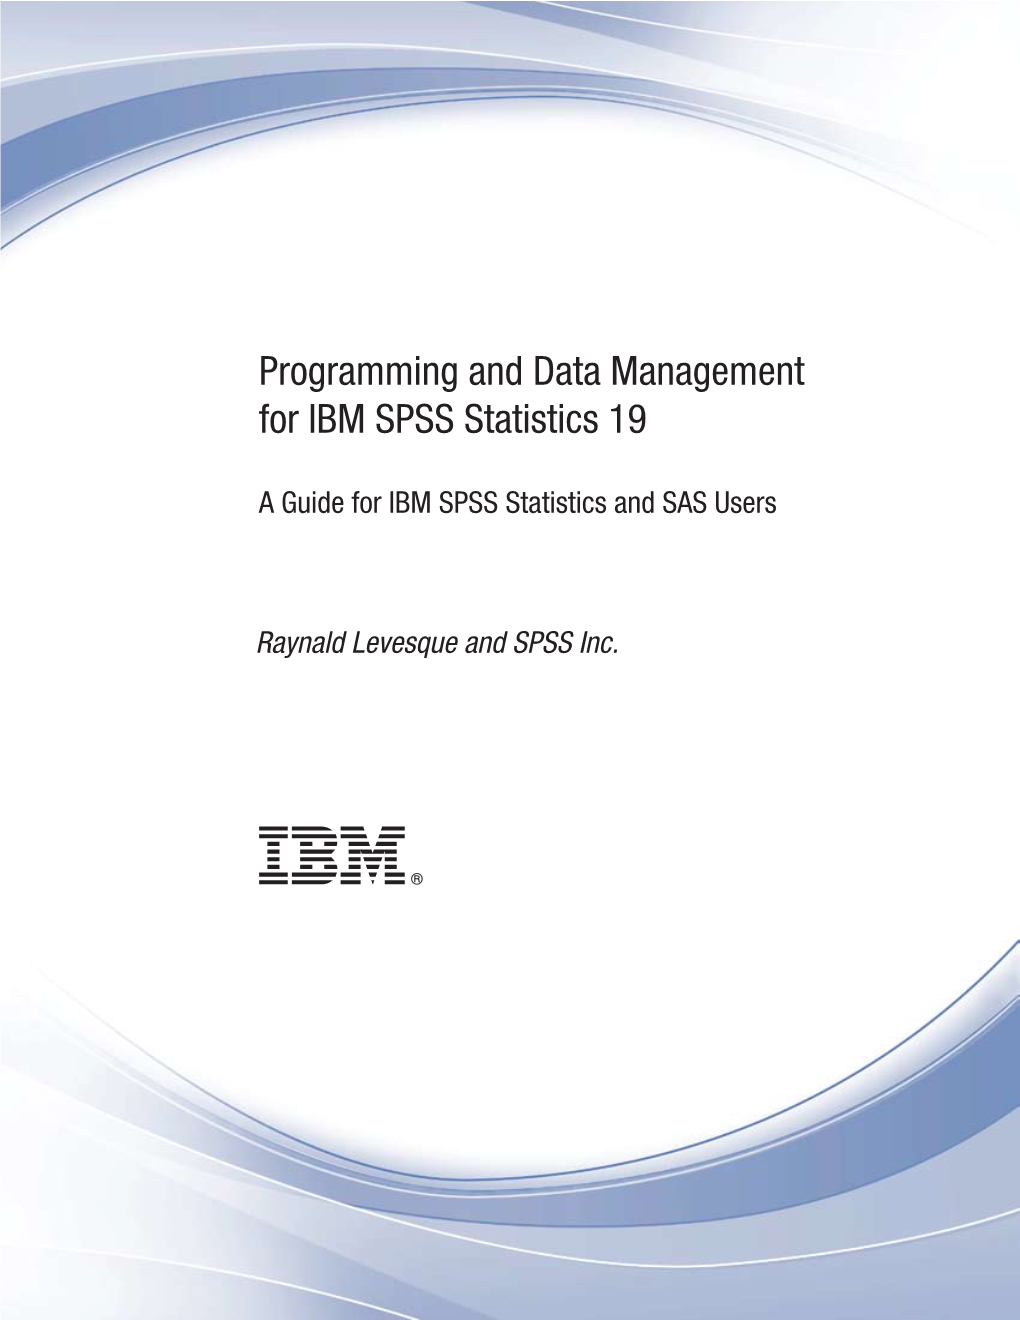 Programming and Data Management for IBM SPSS Statistics 19